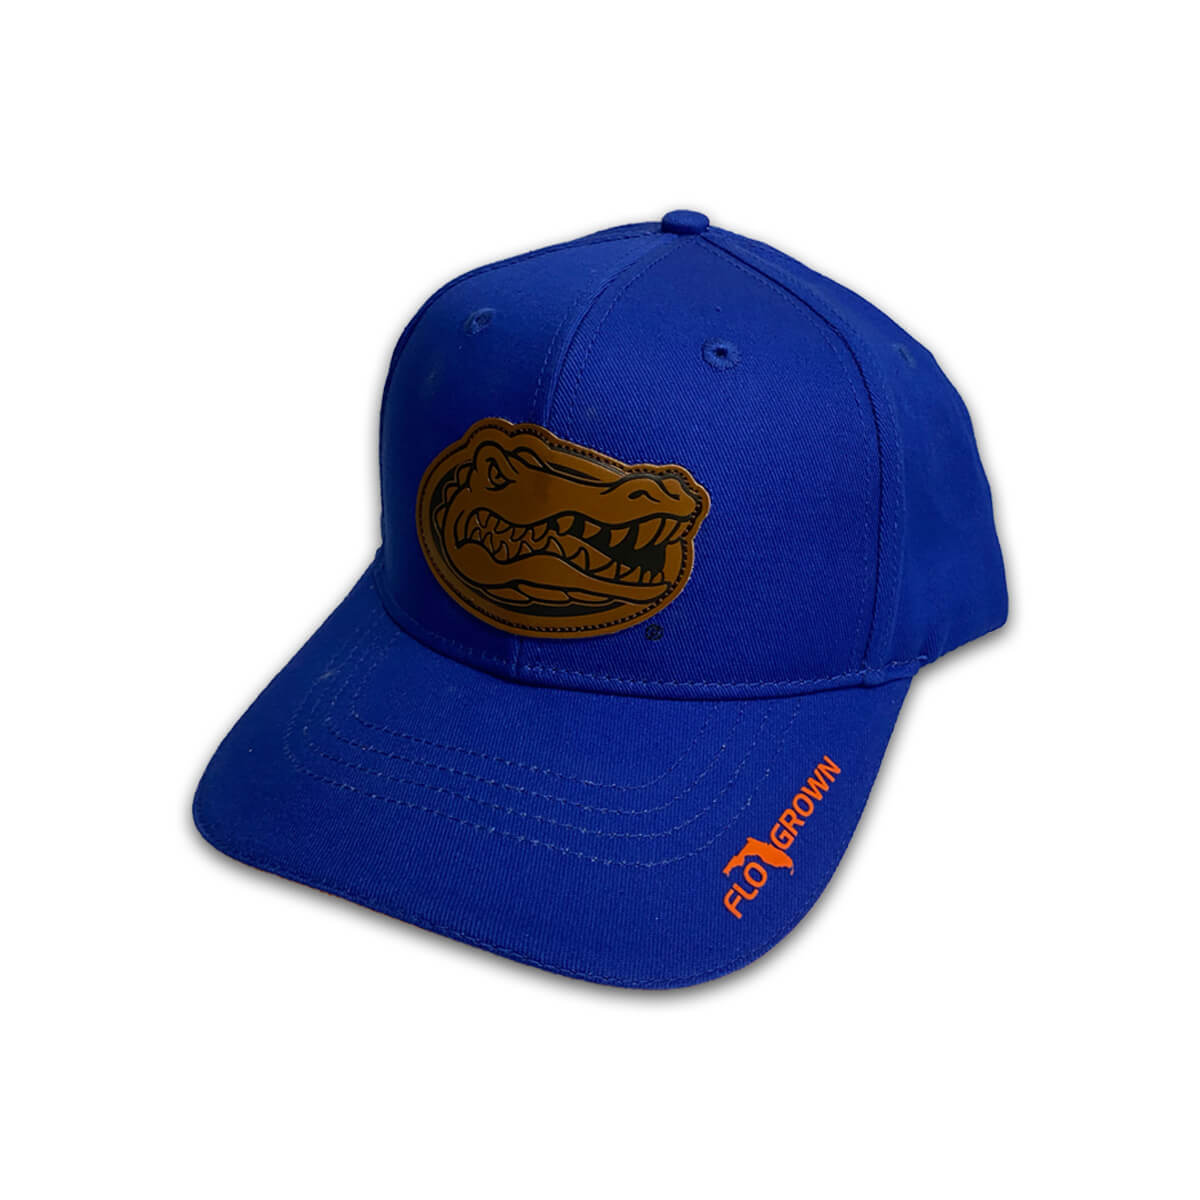 Florida Gators Blue Twill Hat